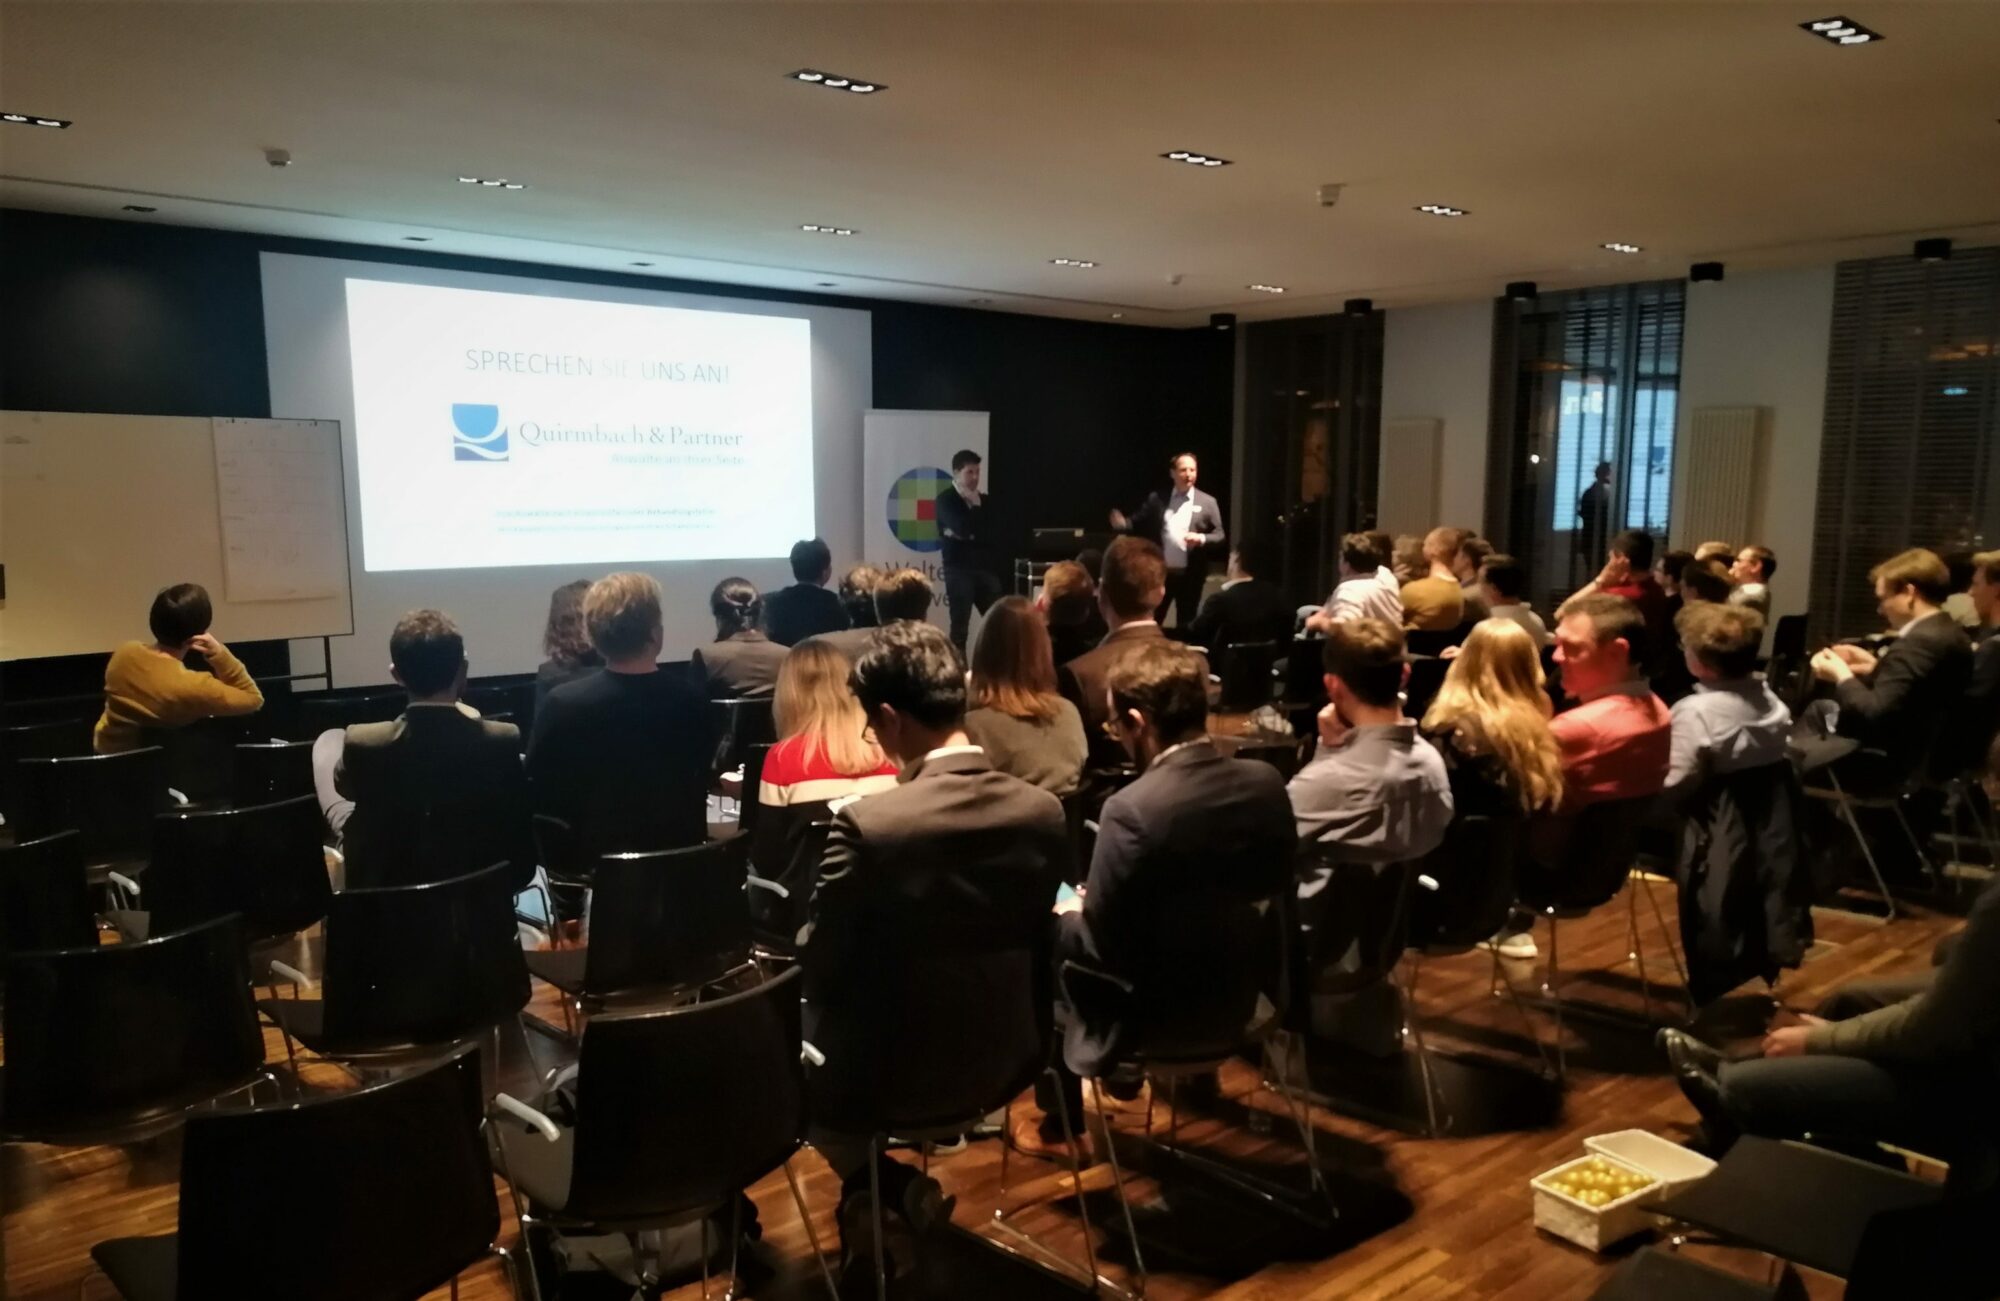 Das 7. Legal Tech Meetup NRW - Quirmbach & Partners persönlicher Weg zur agilen Kanzlei